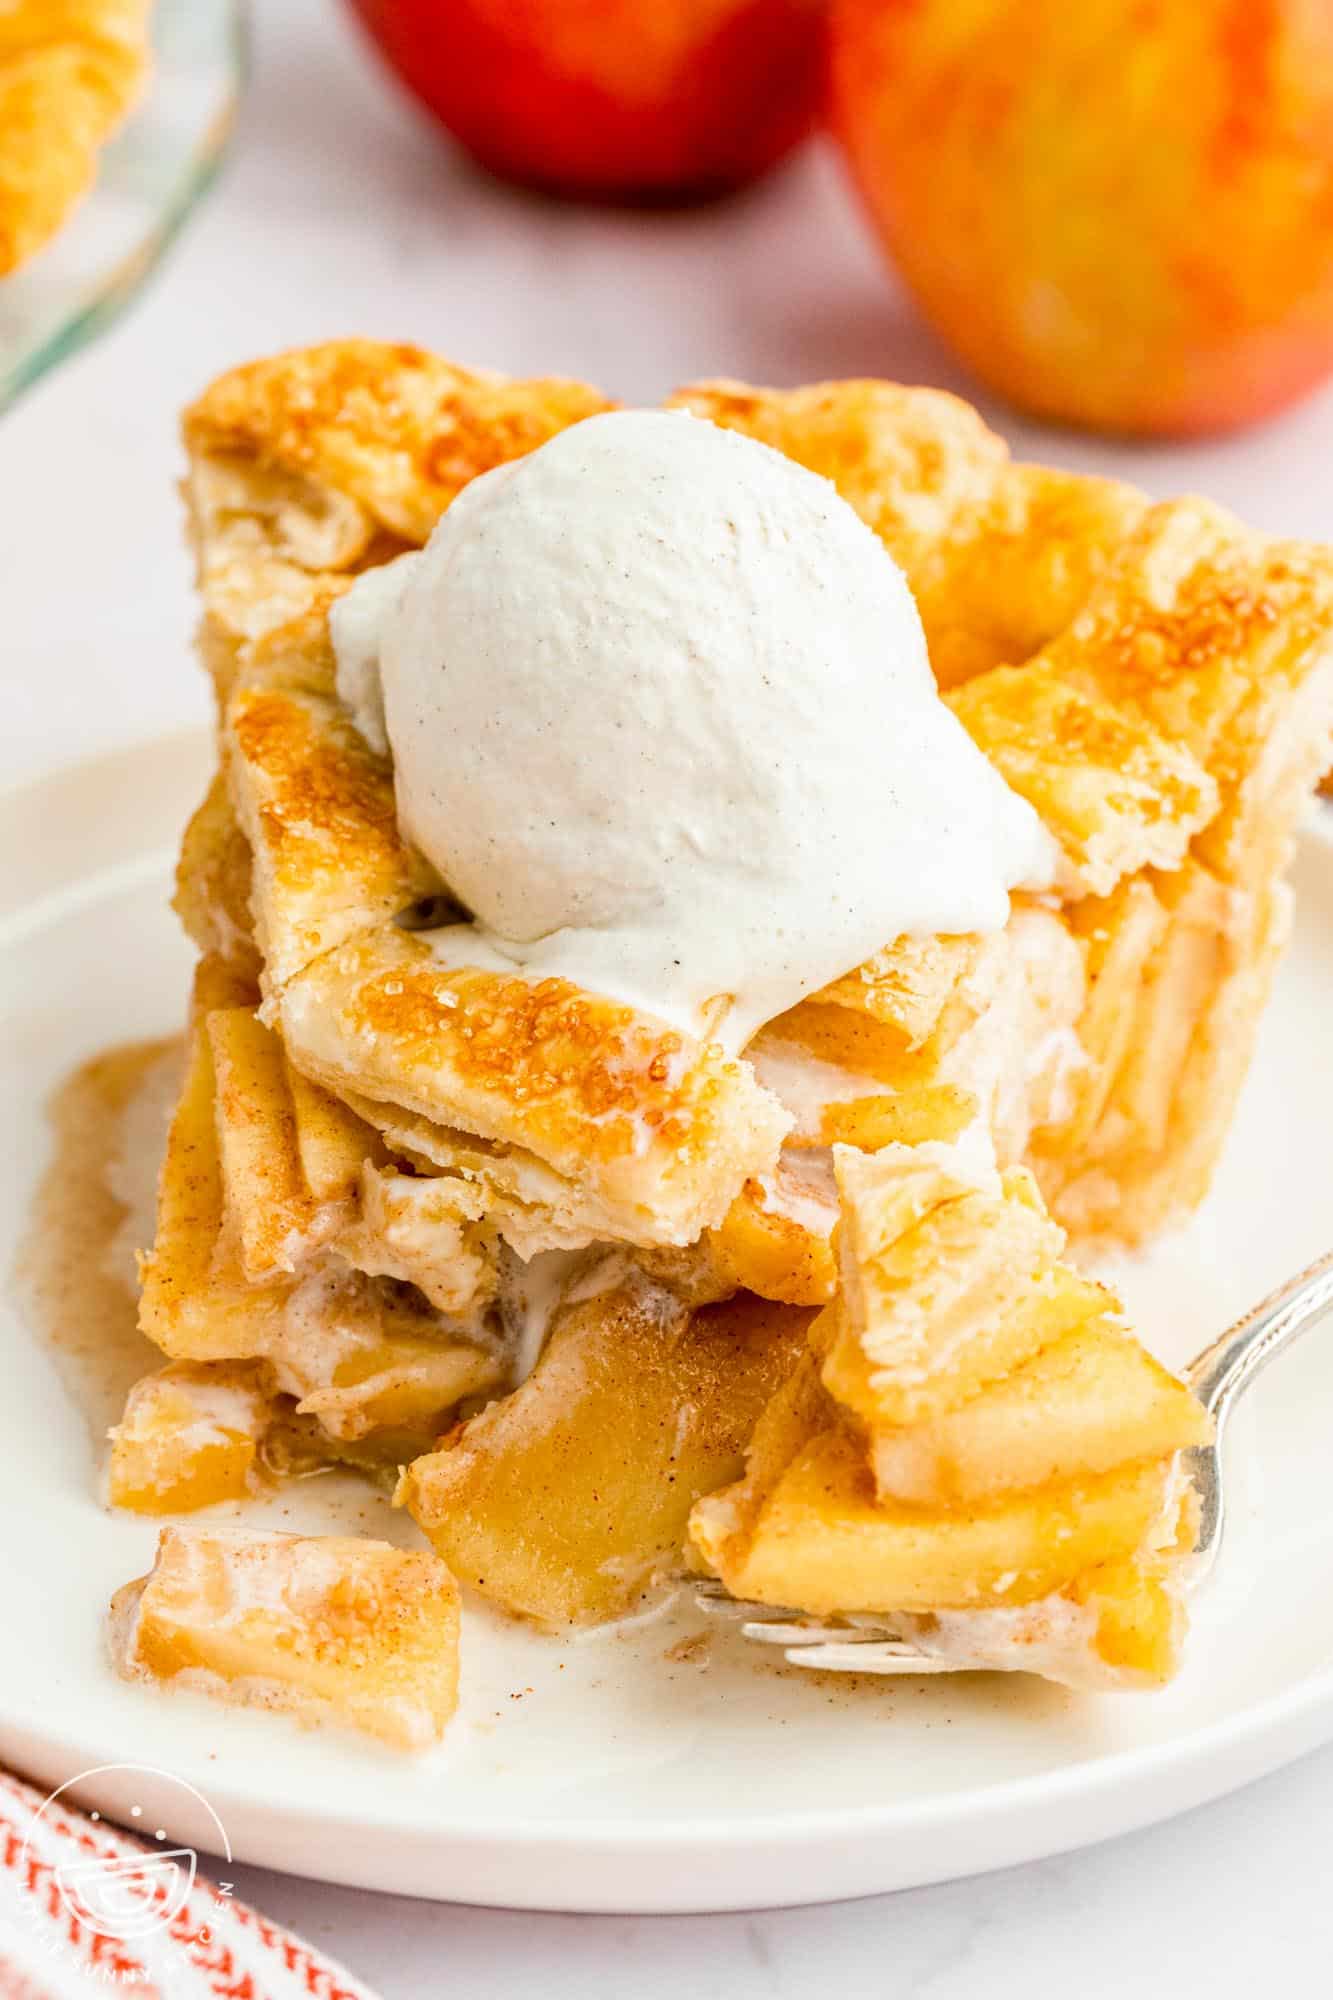 Bite shot of apple pie slice with vanilla ice cream